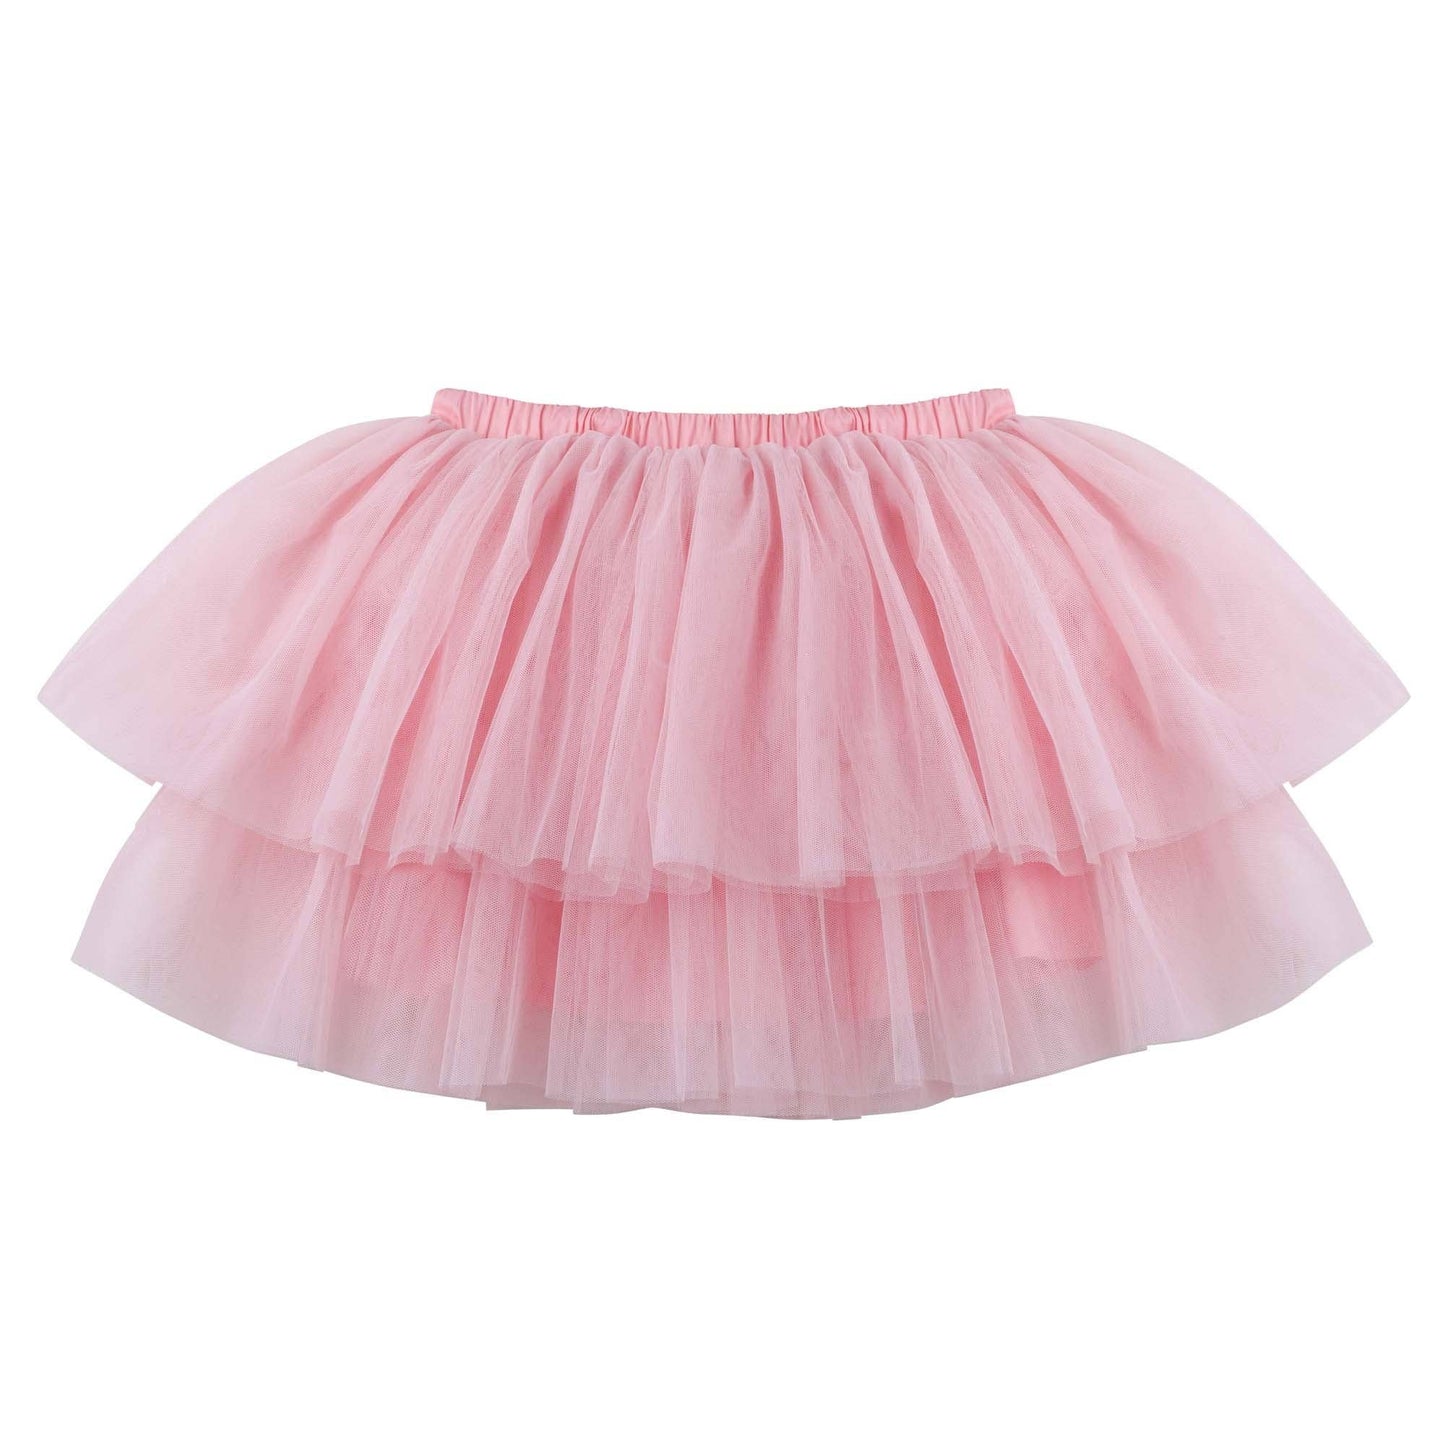 Tutu Skirt - Dusty Pink